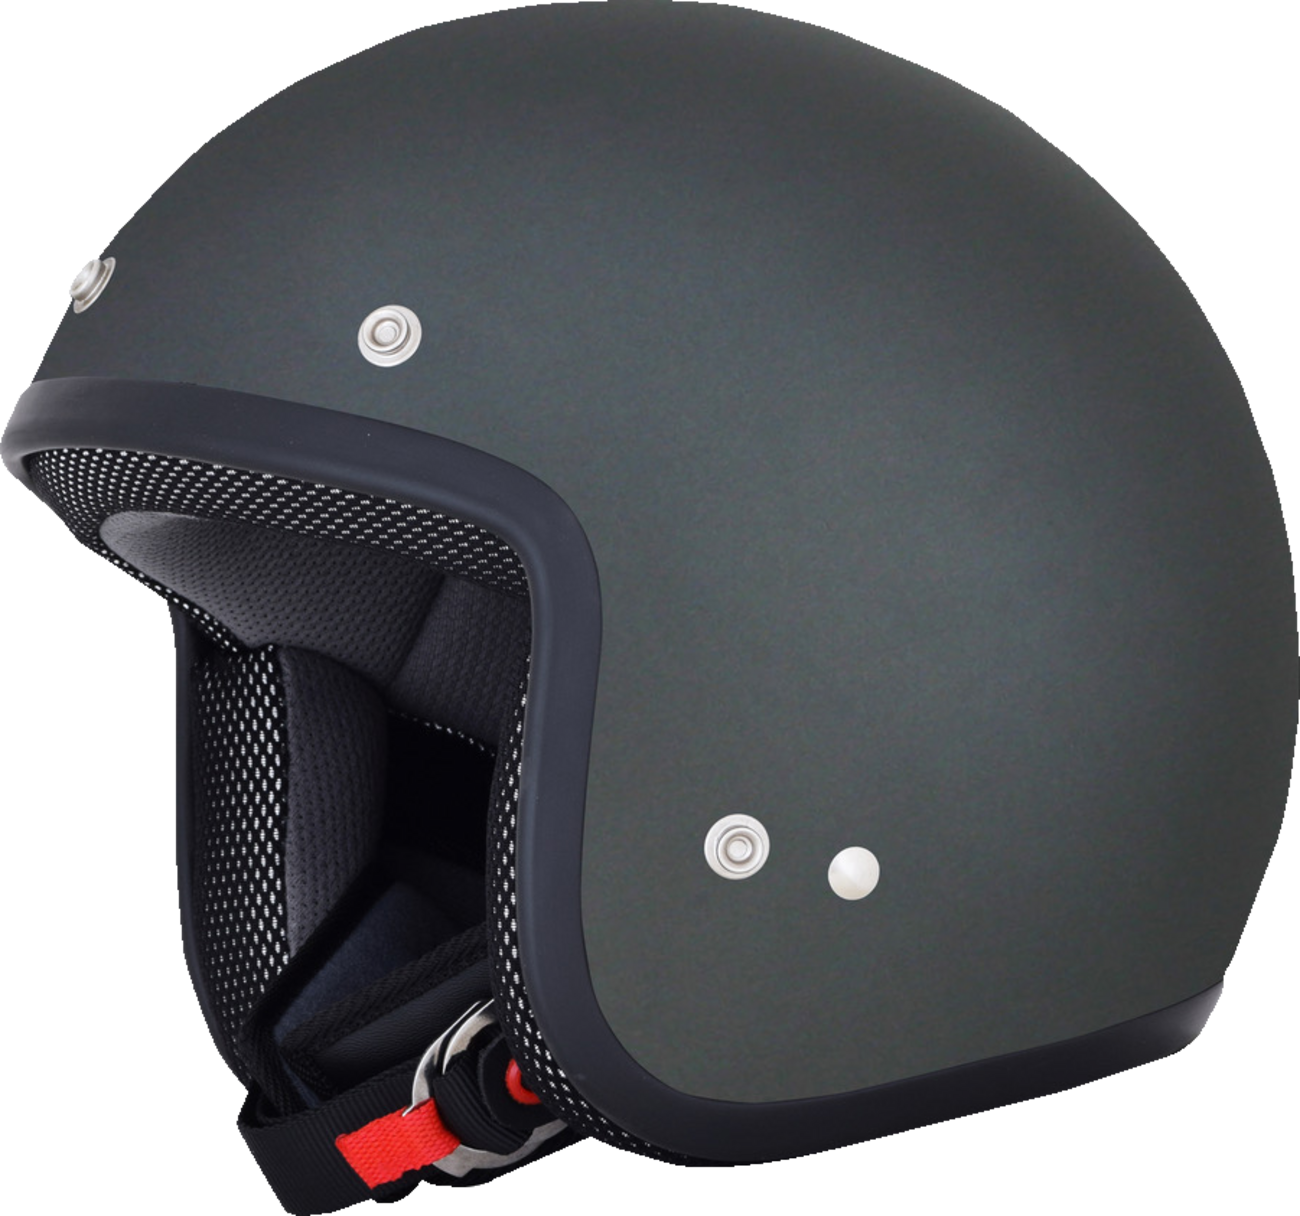 AFX FX-75 Helmet - Frost Gray - Small 0104-2865